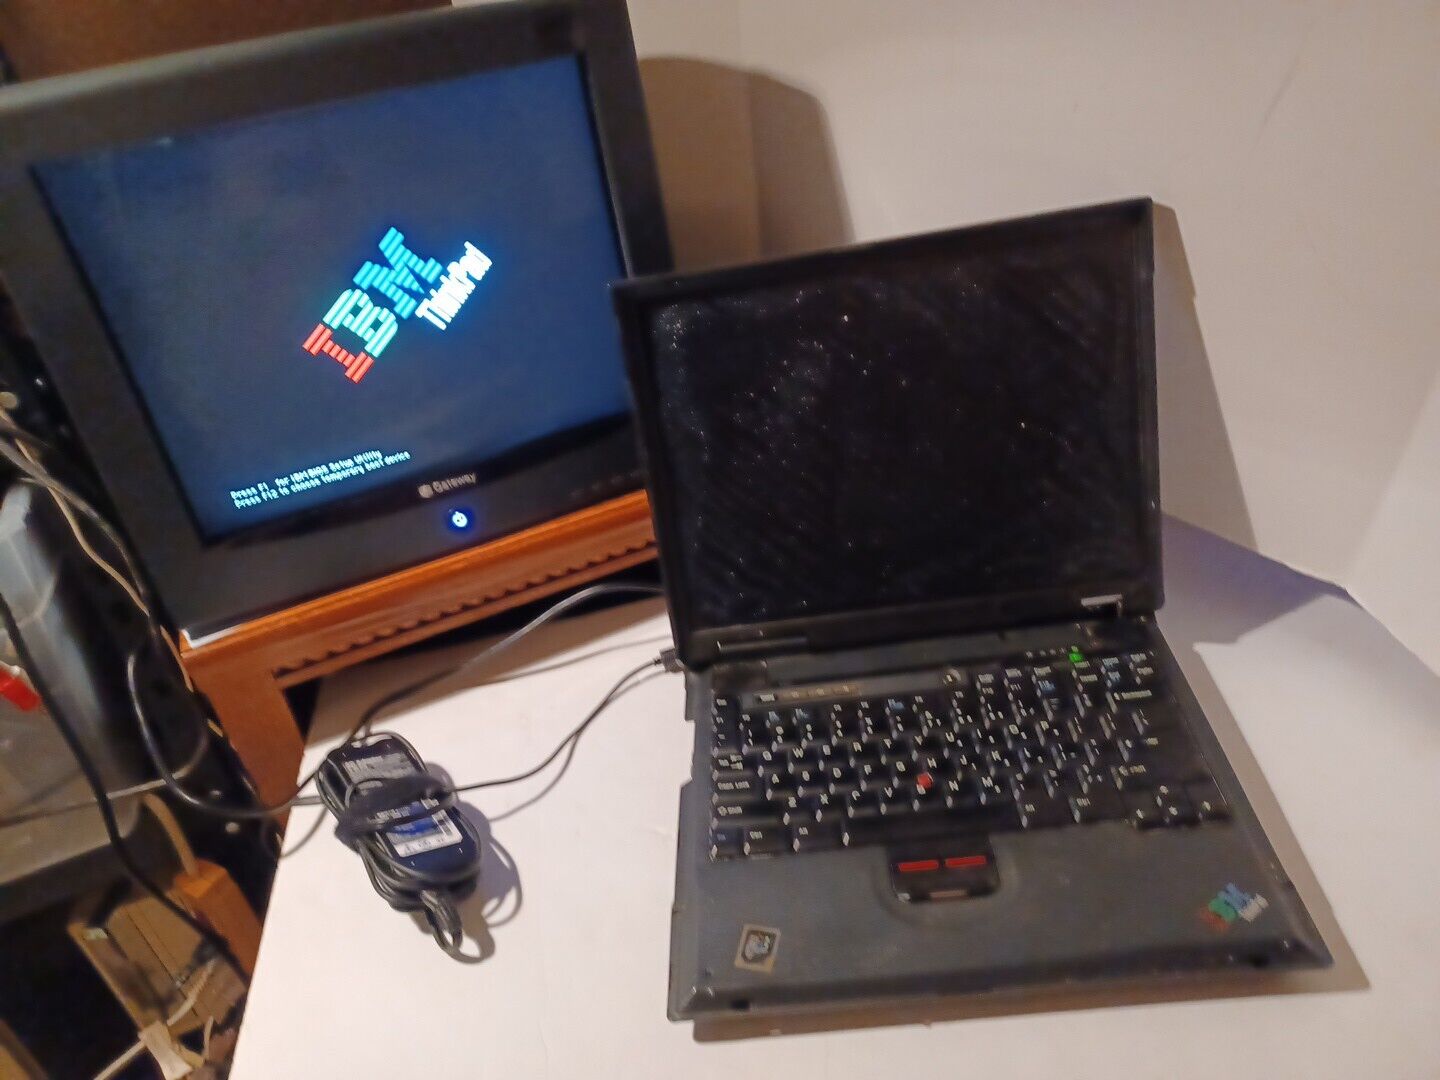 IBM ThinkPad A22m Intel Pentium 3 800 MHz 128mb RAM Vintage Laptop 2628